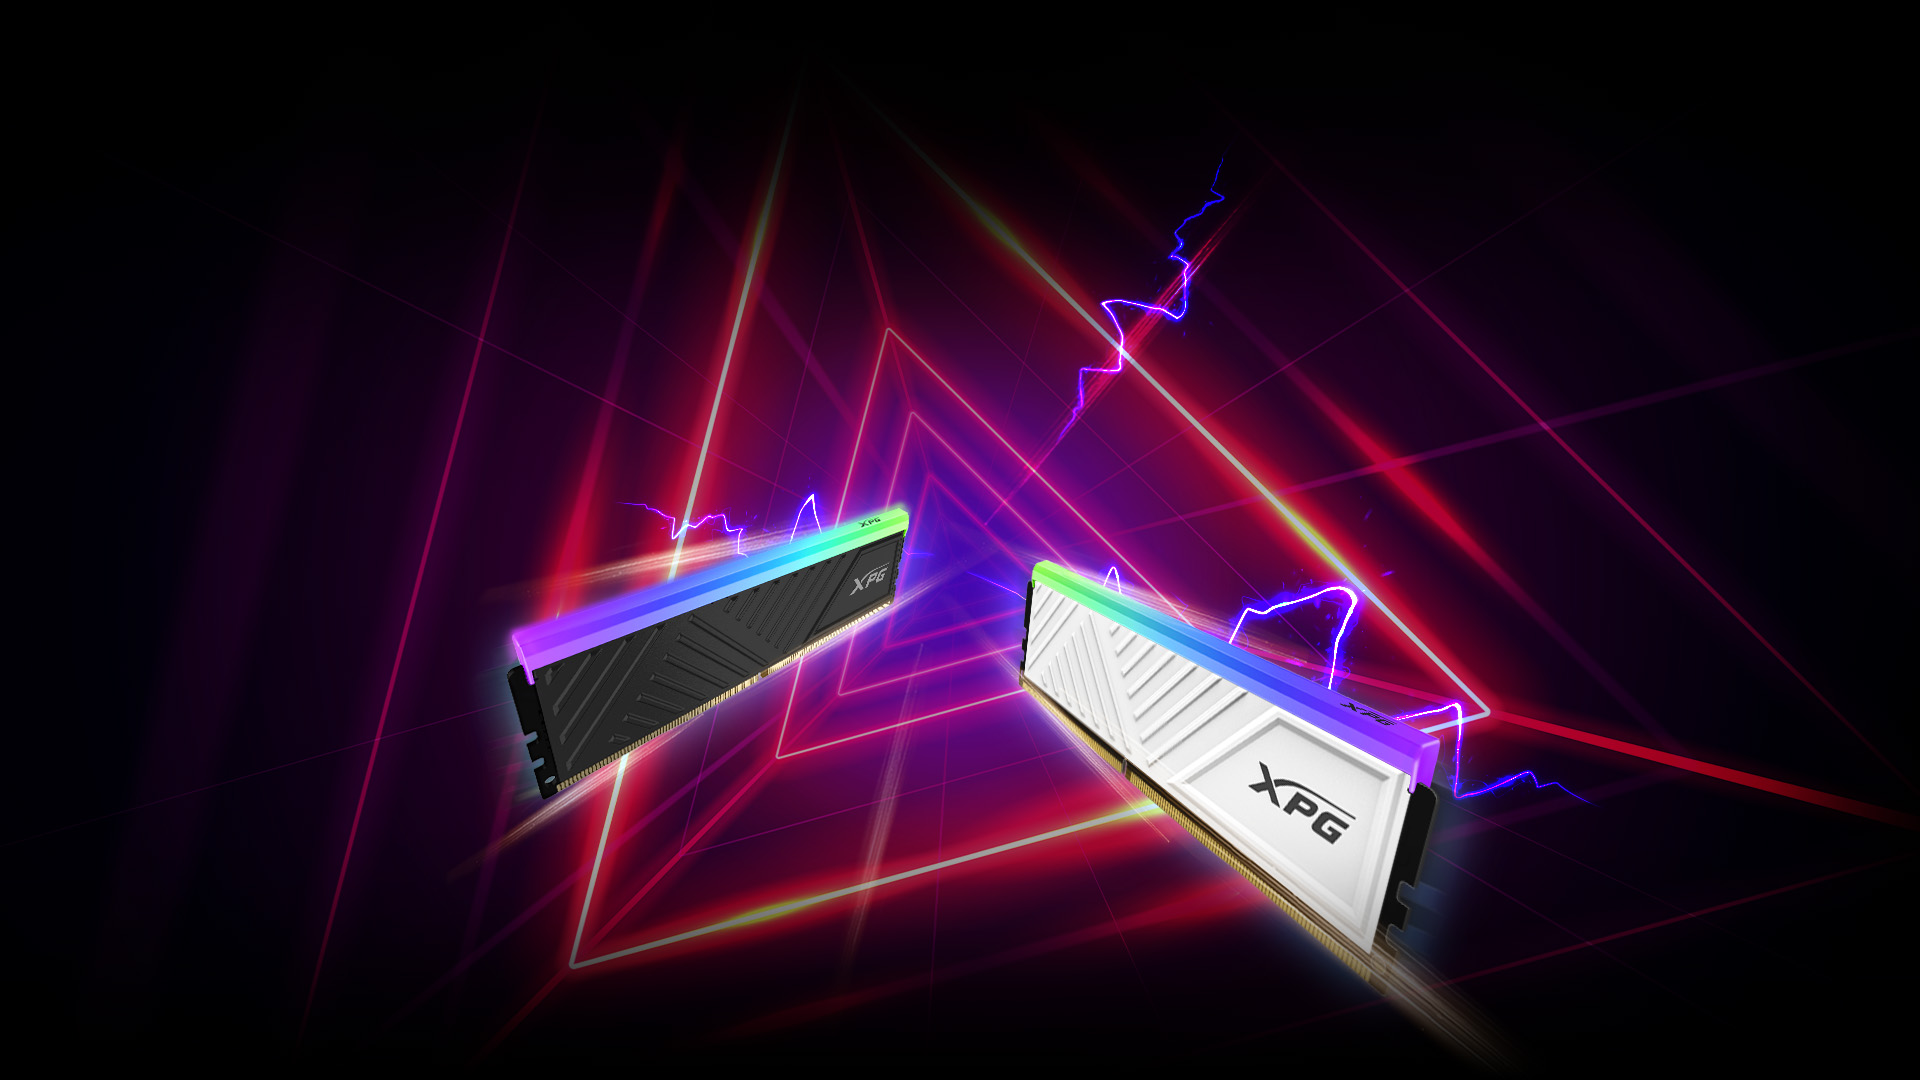 SPECTRIX D35G DDR4 RGB Memory | XPG